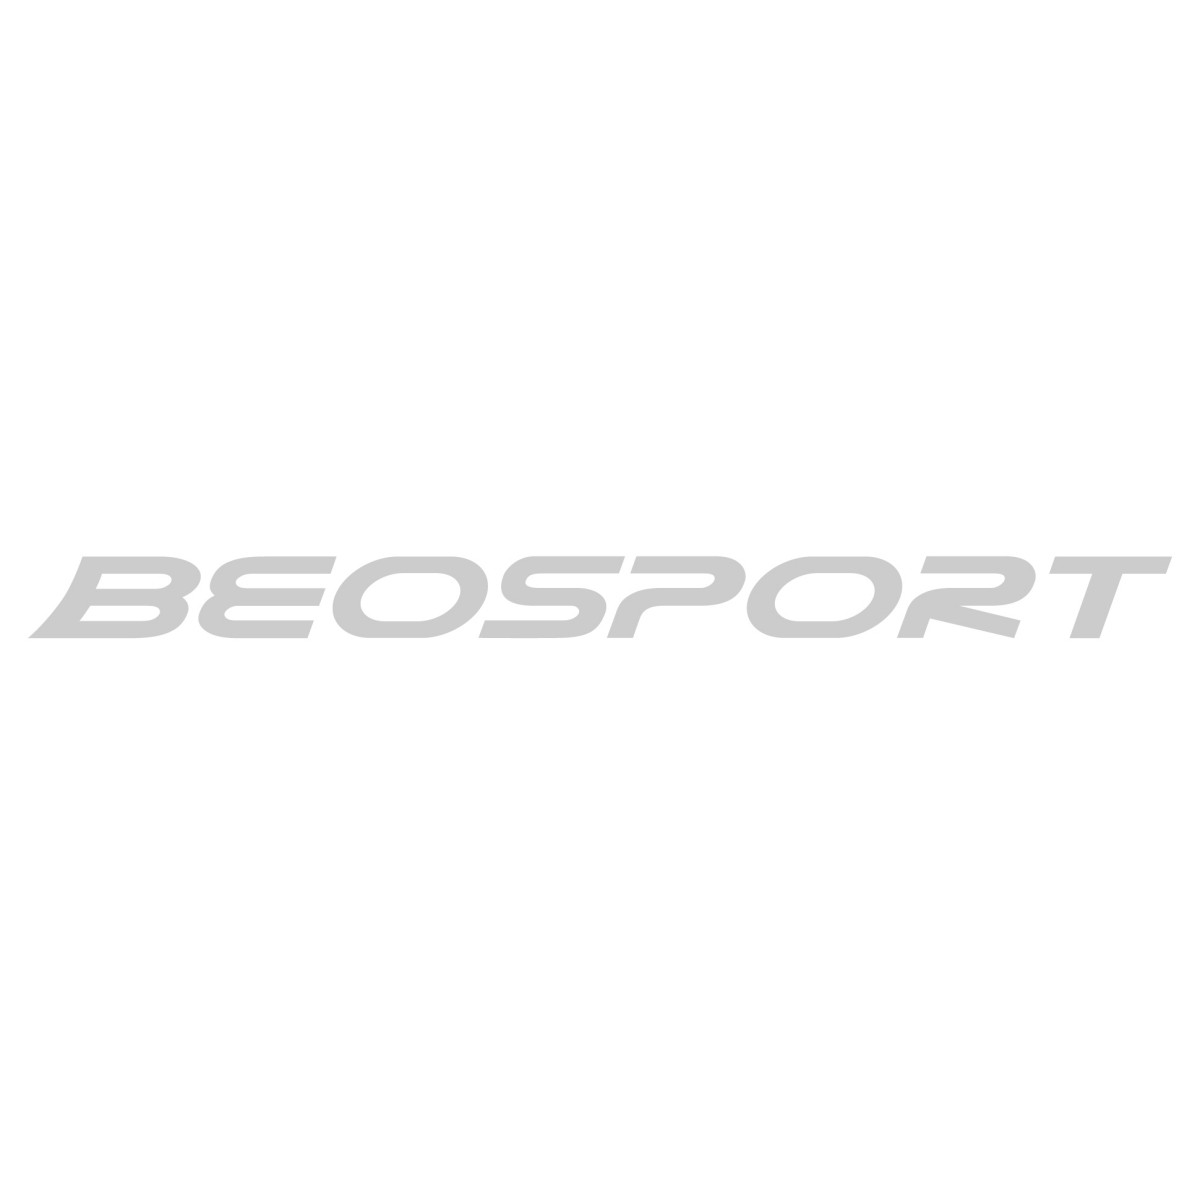 The North Face | Odeća, Obuća | Outdoor Oprema | Beosport.com